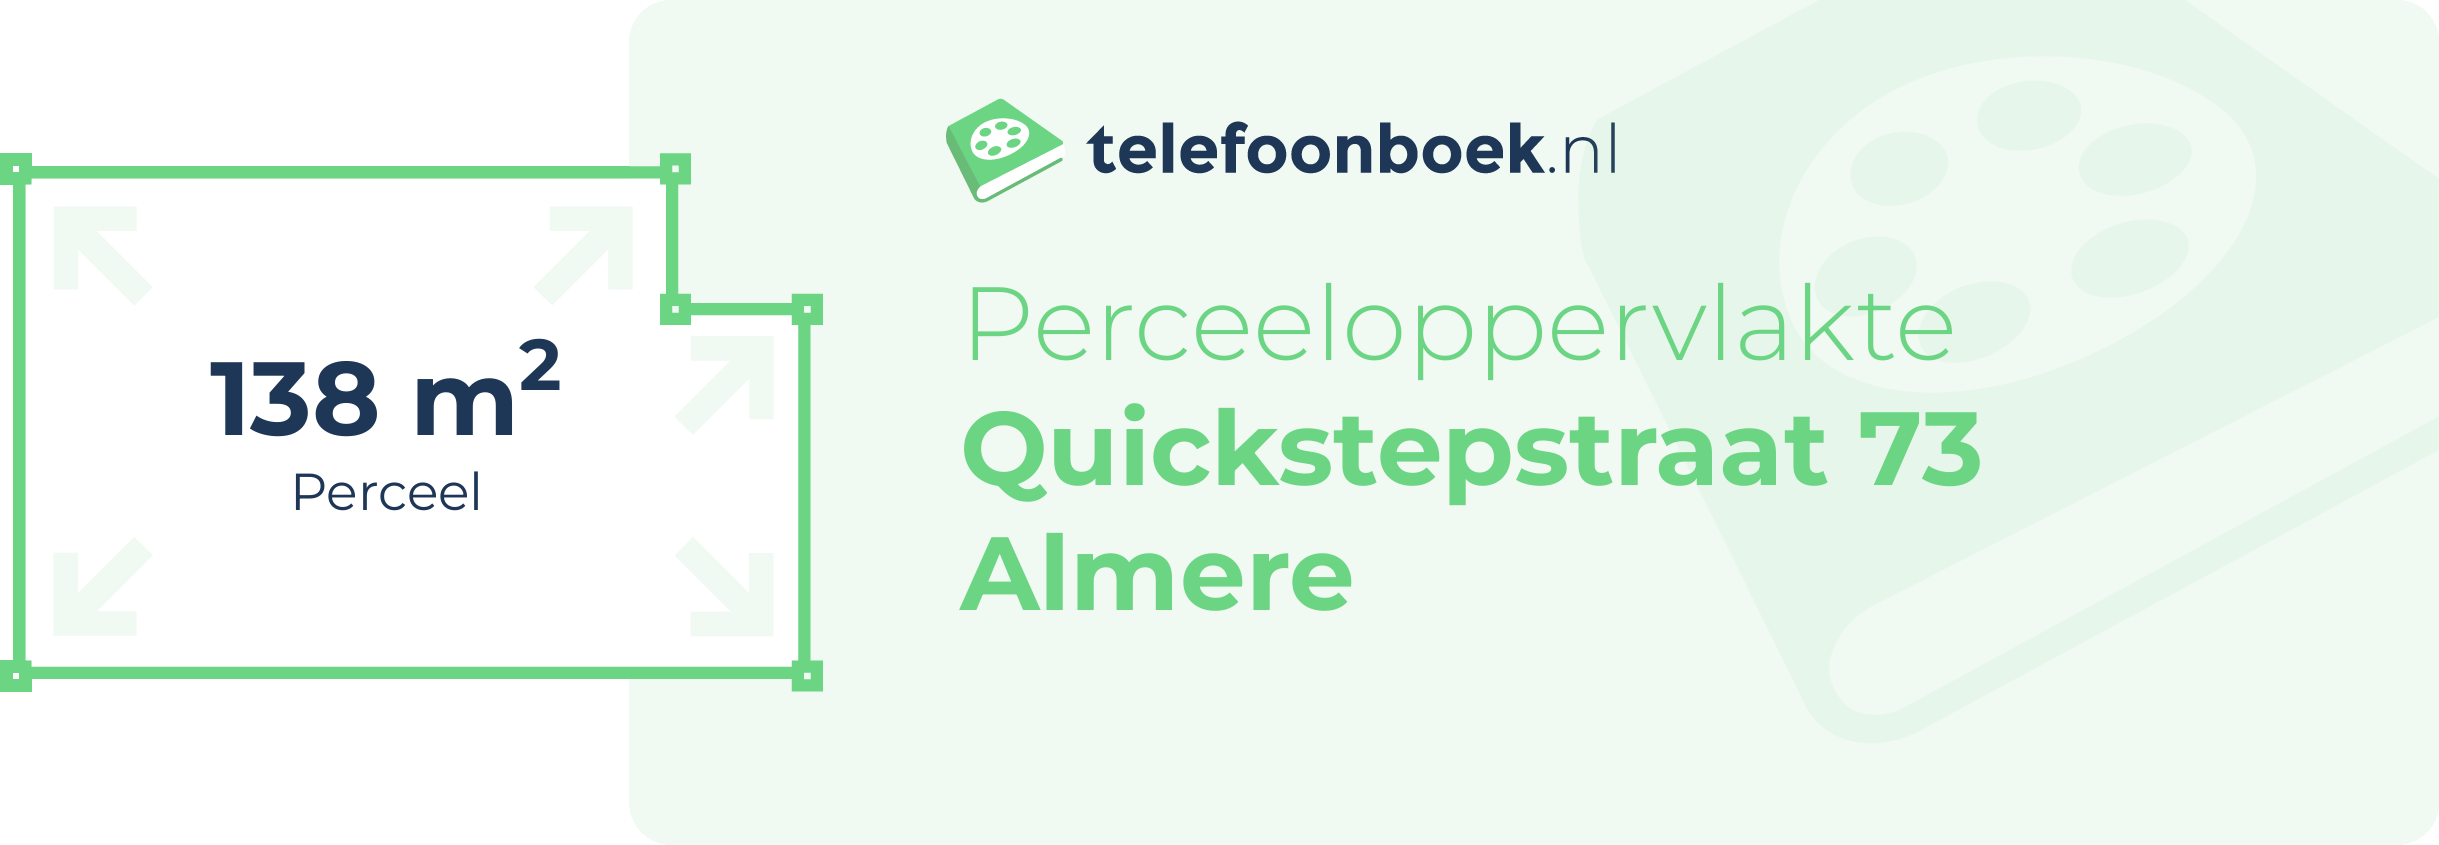 Perceeloppervlakte Quickstepstraat 73 Almere